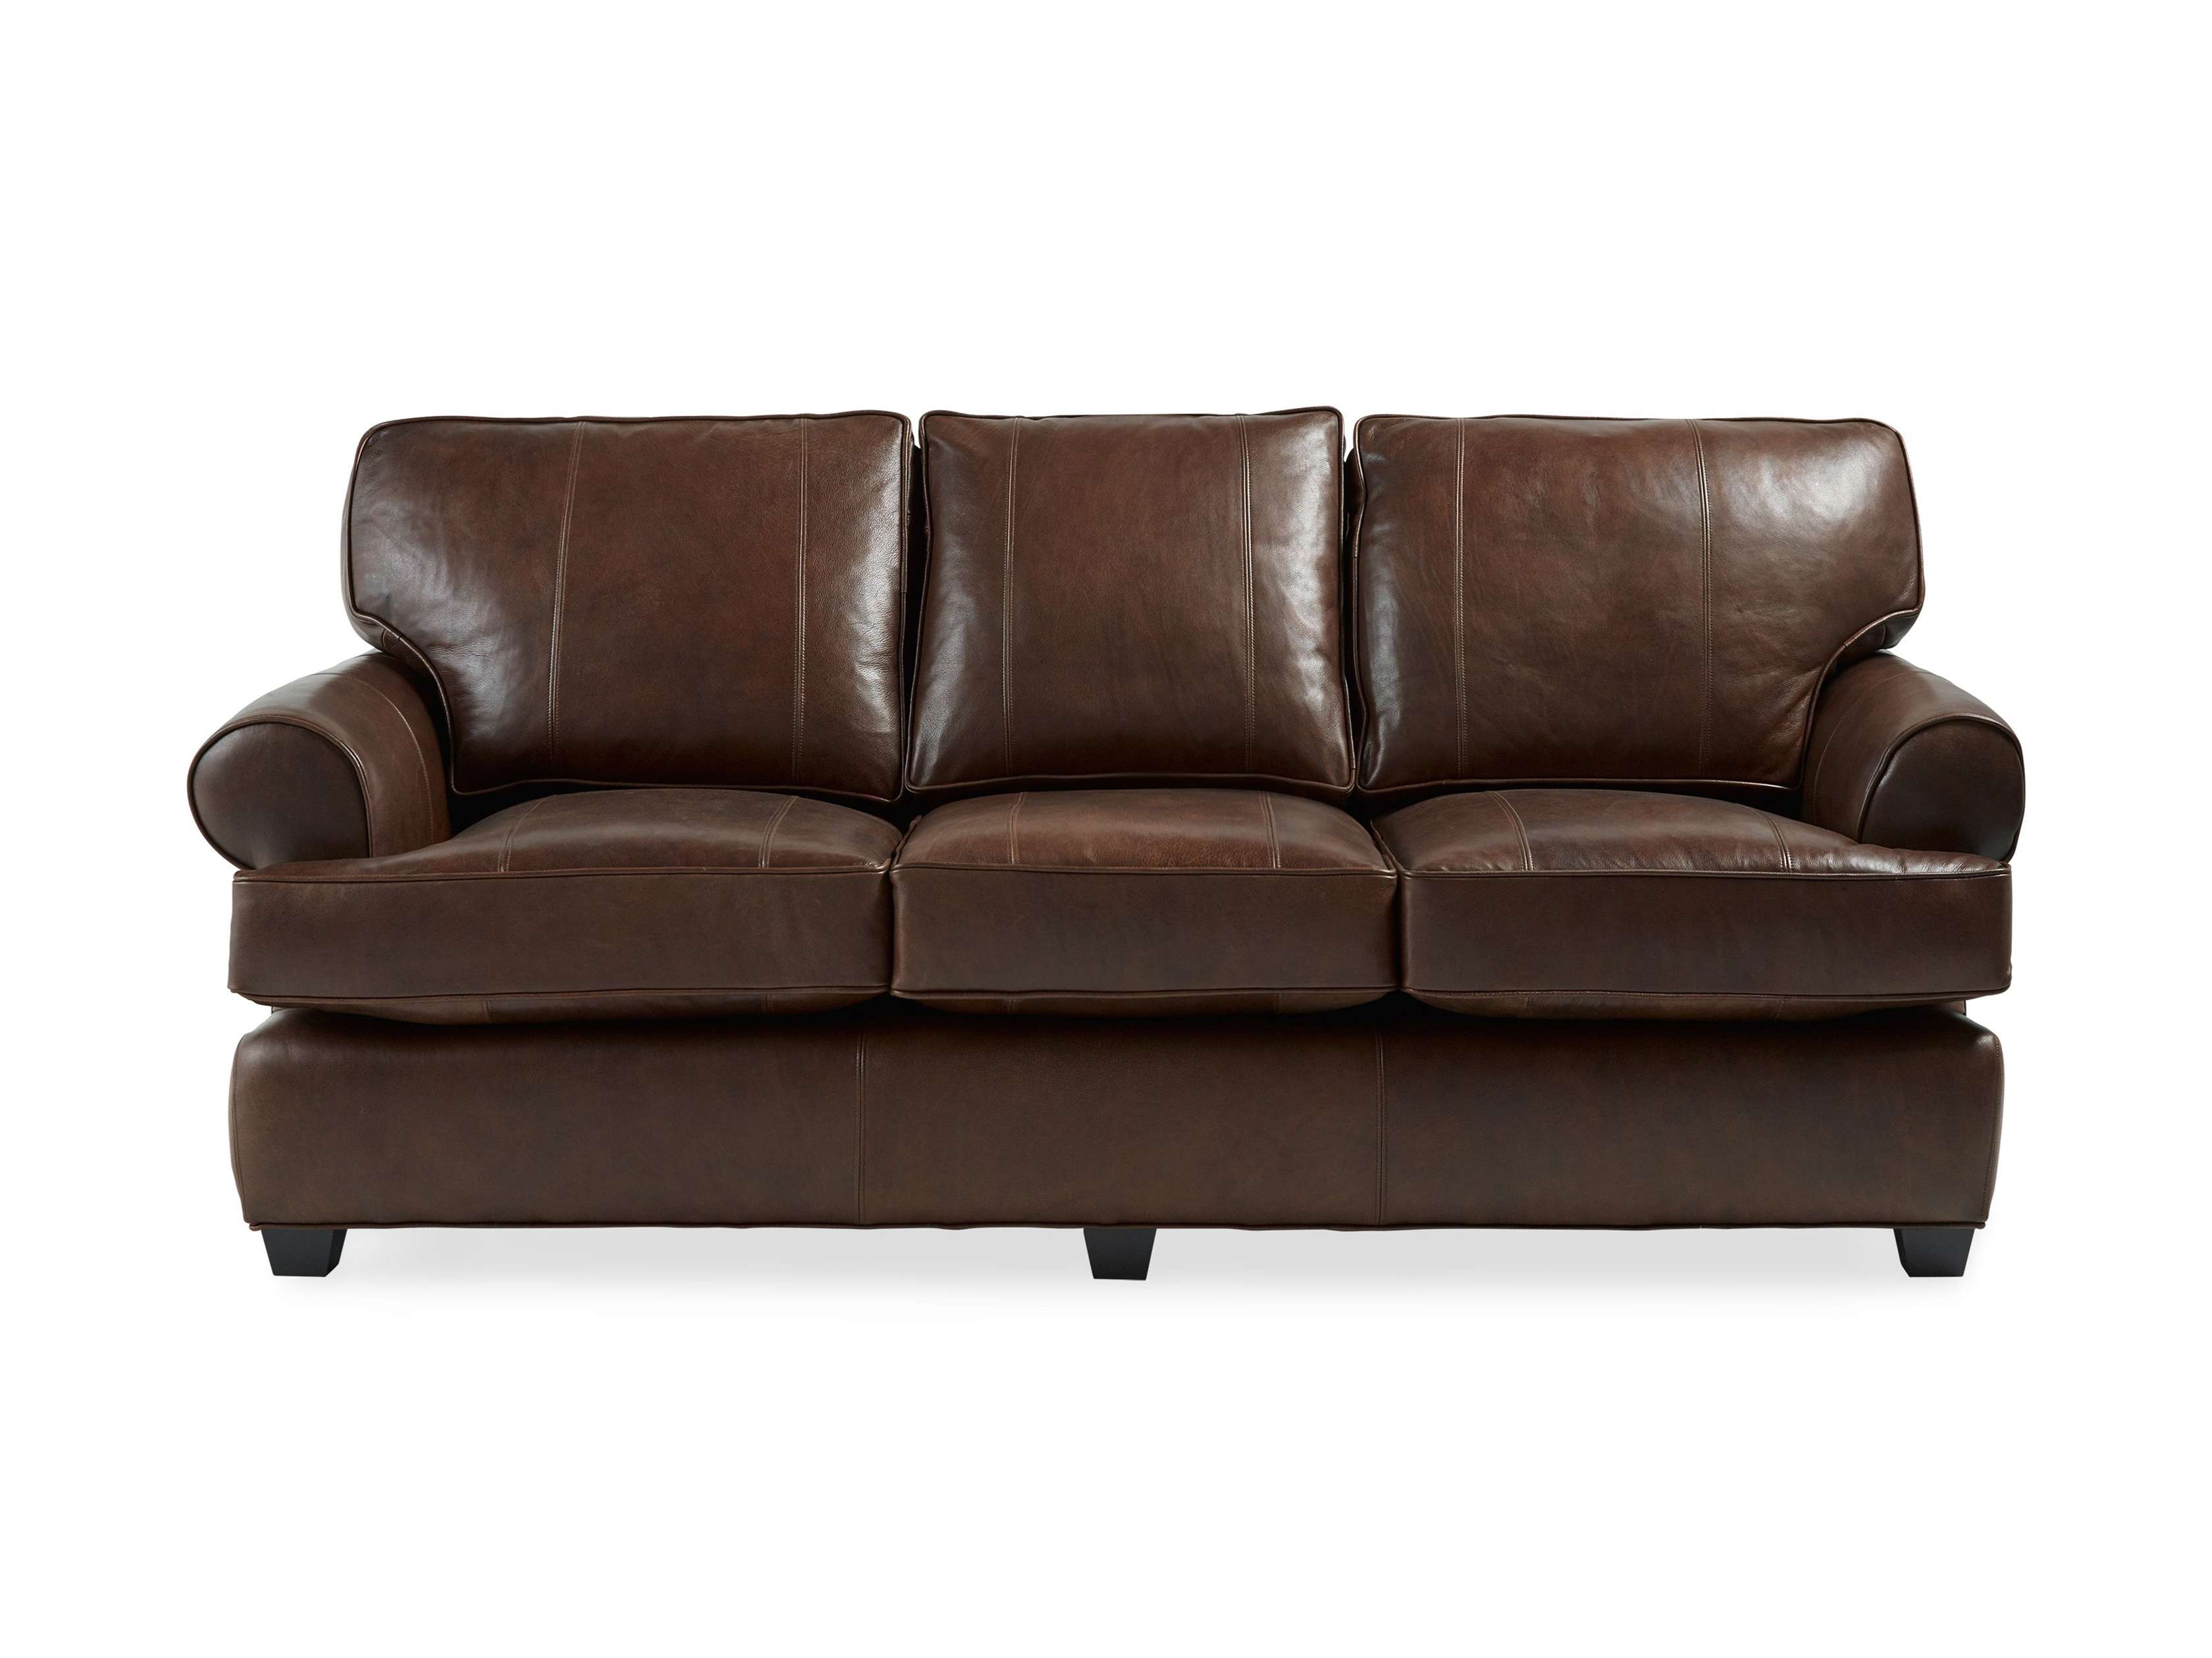 Hadley Leather Sofa Arhaus, Chocolate Brown Leather Sofa Set